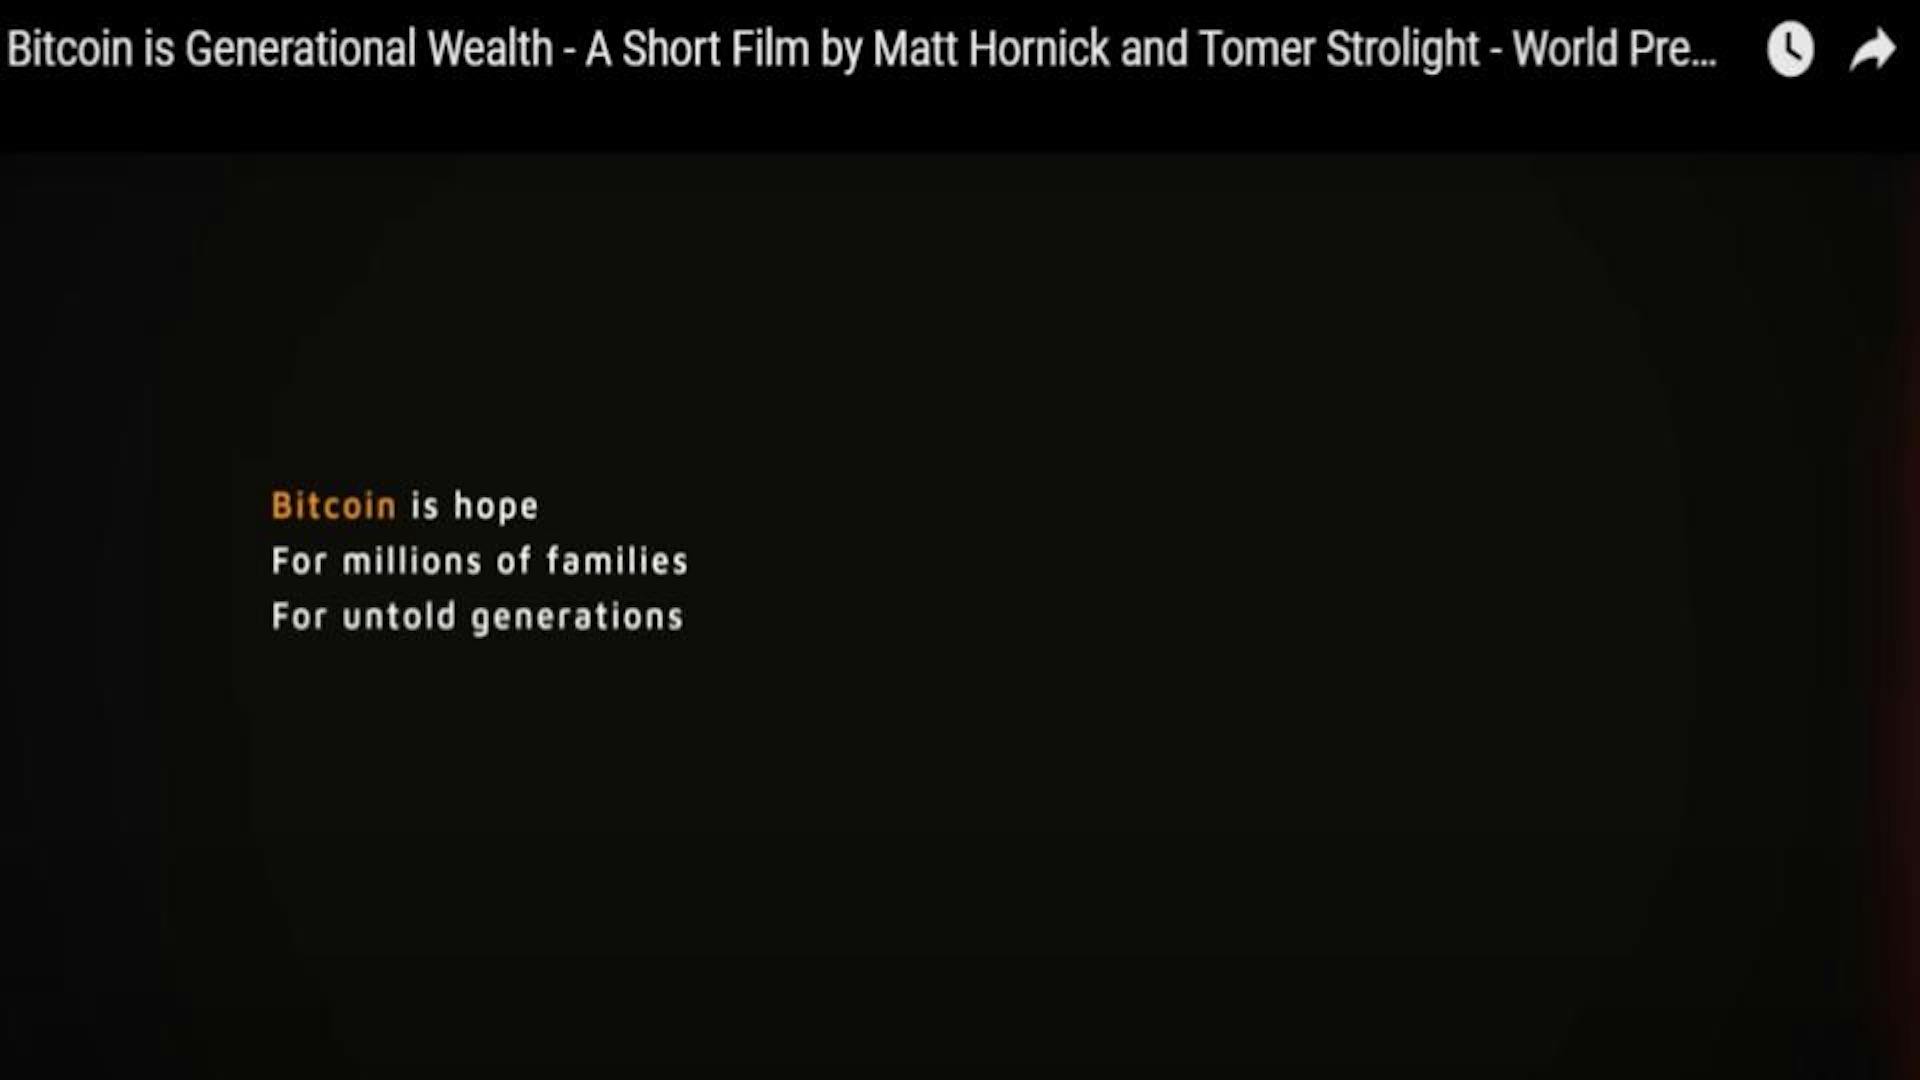 Source: Short film Bitcoin is generational wealth: https://www.youtube.com/watch?v=3Rnqst5qCgA